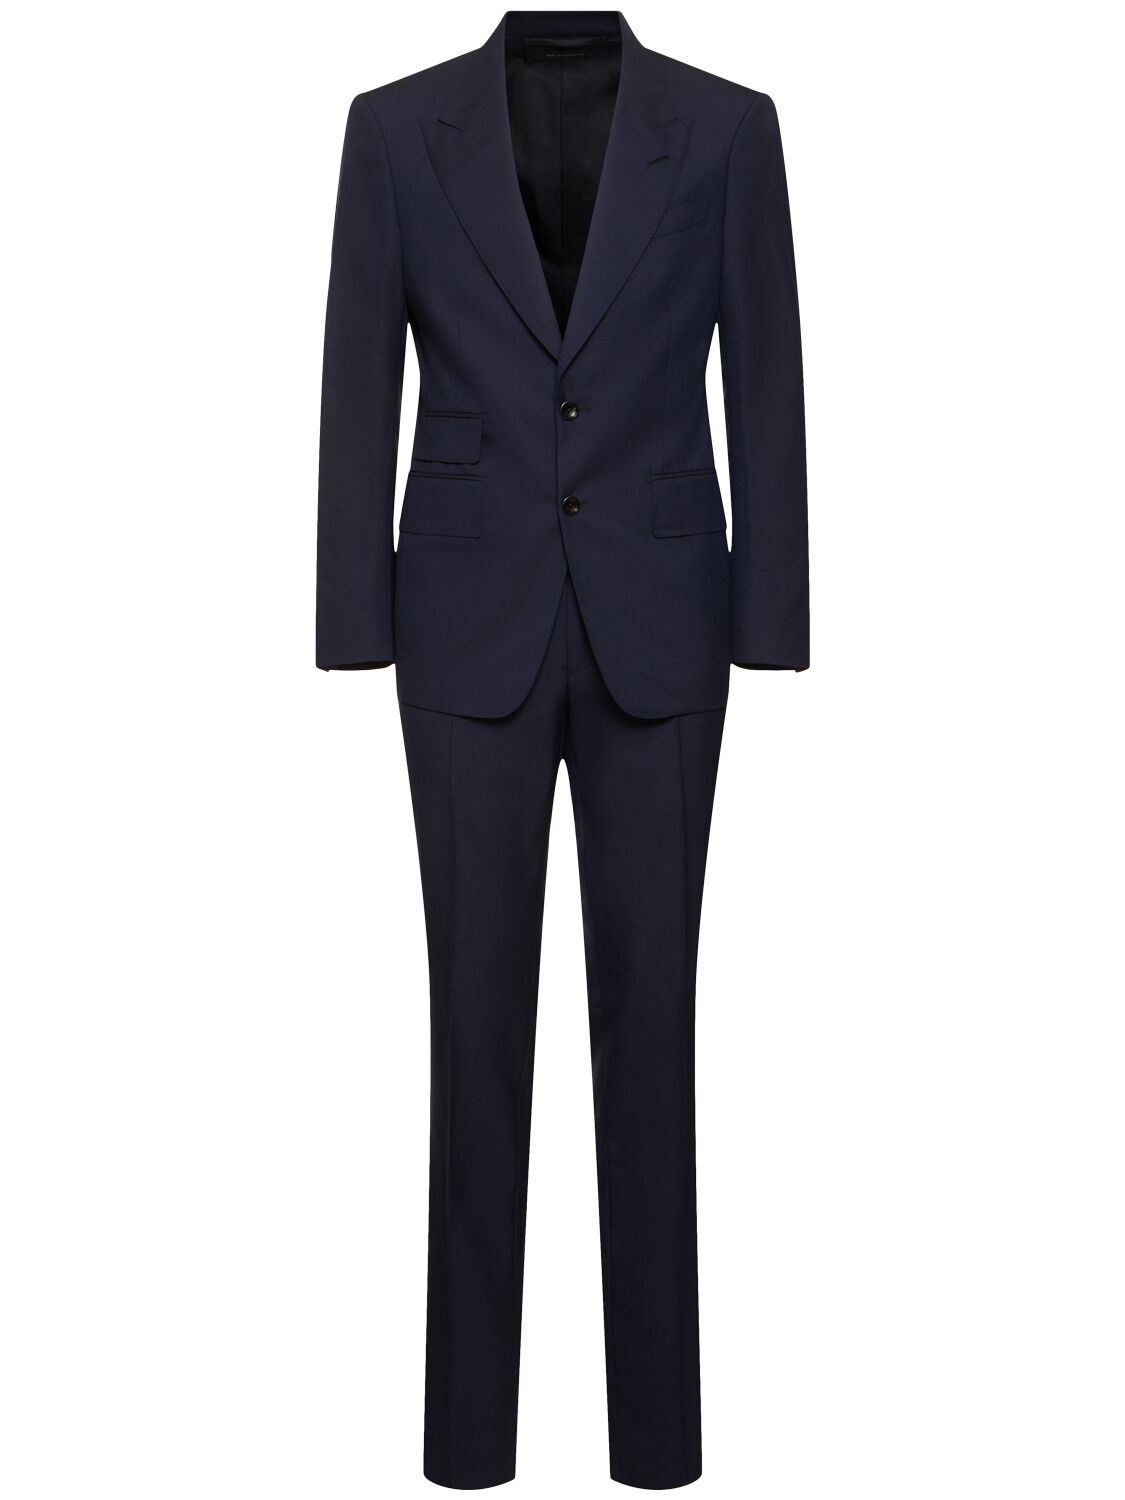 Tom Ford Shelton Peak Lapel Suit In Midnight Blue